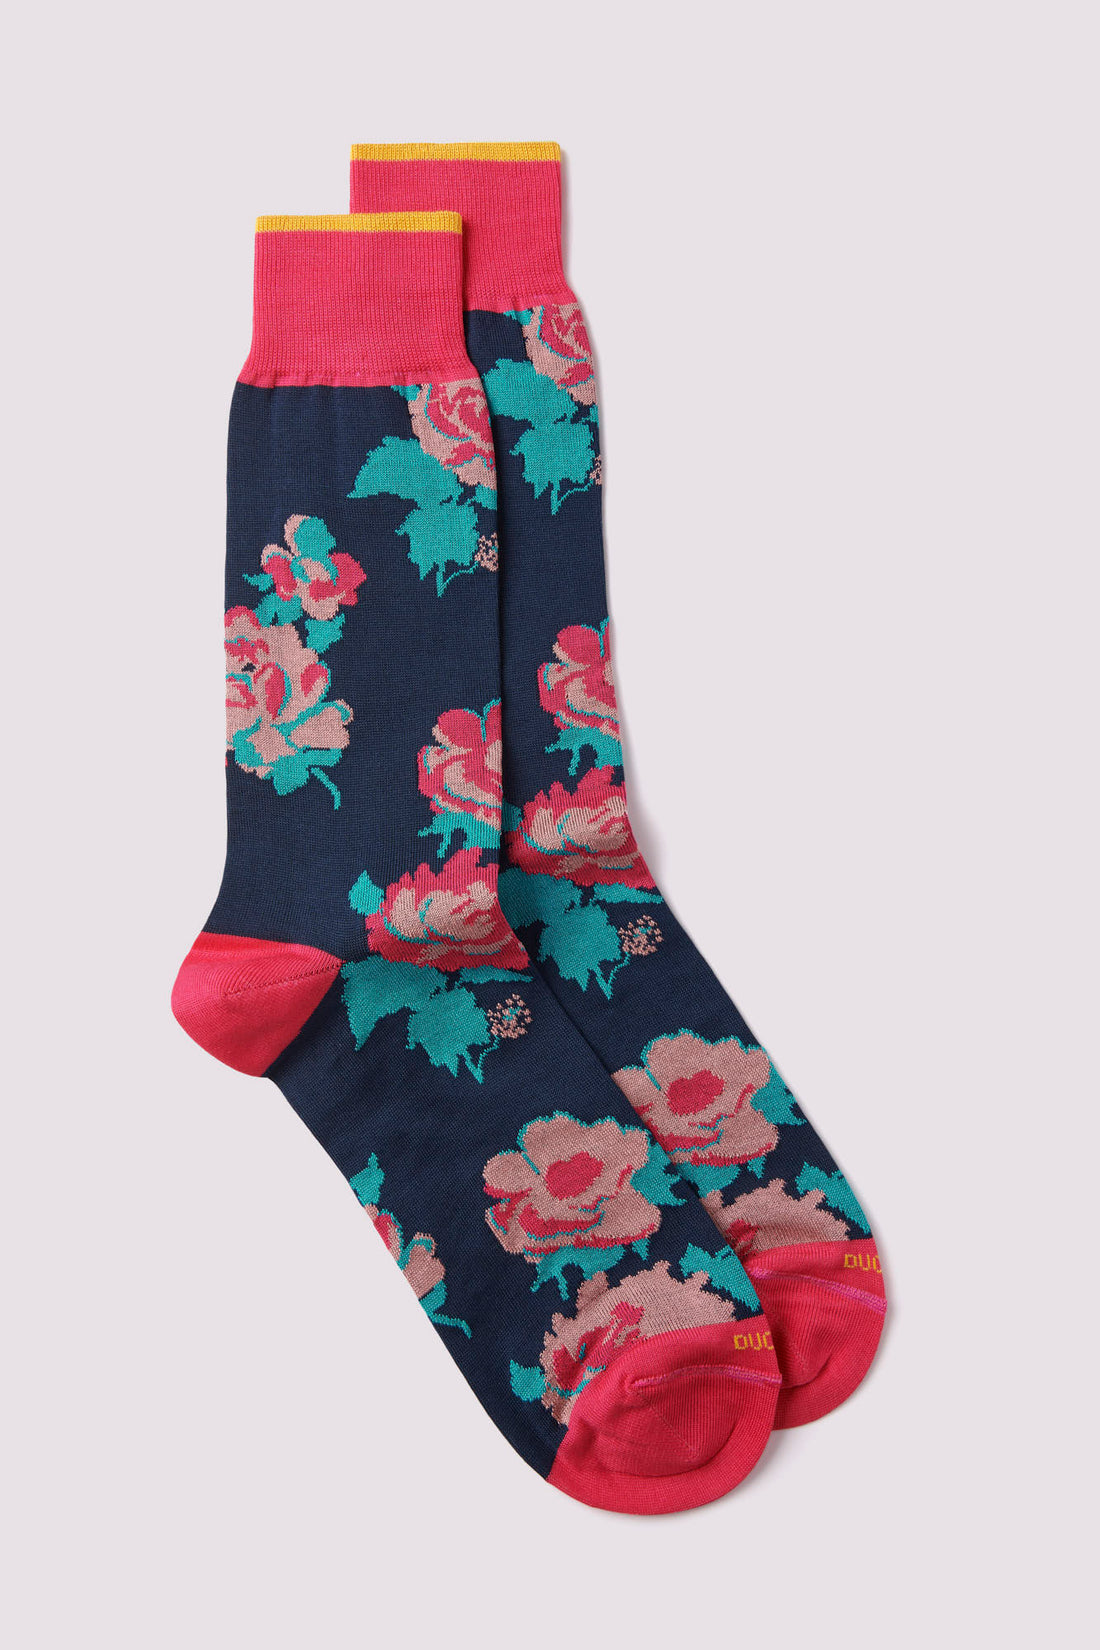 Floral Impression Socks in Fuchsia